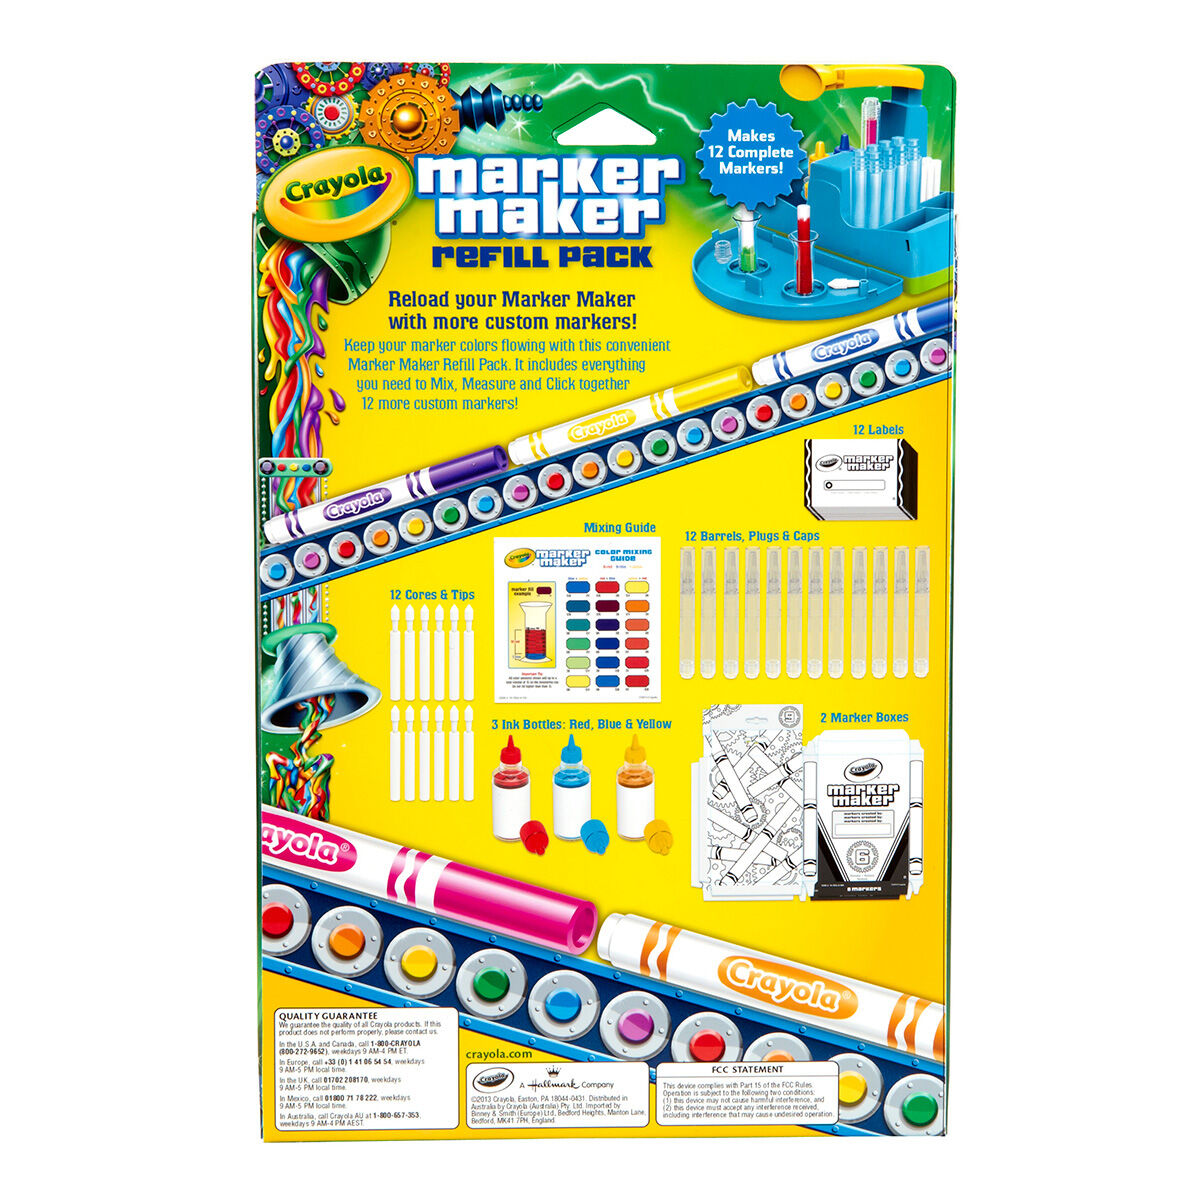 Gambar Marker Maker Unit Refill Pack Crayola Coloring Page di Rebanas ...